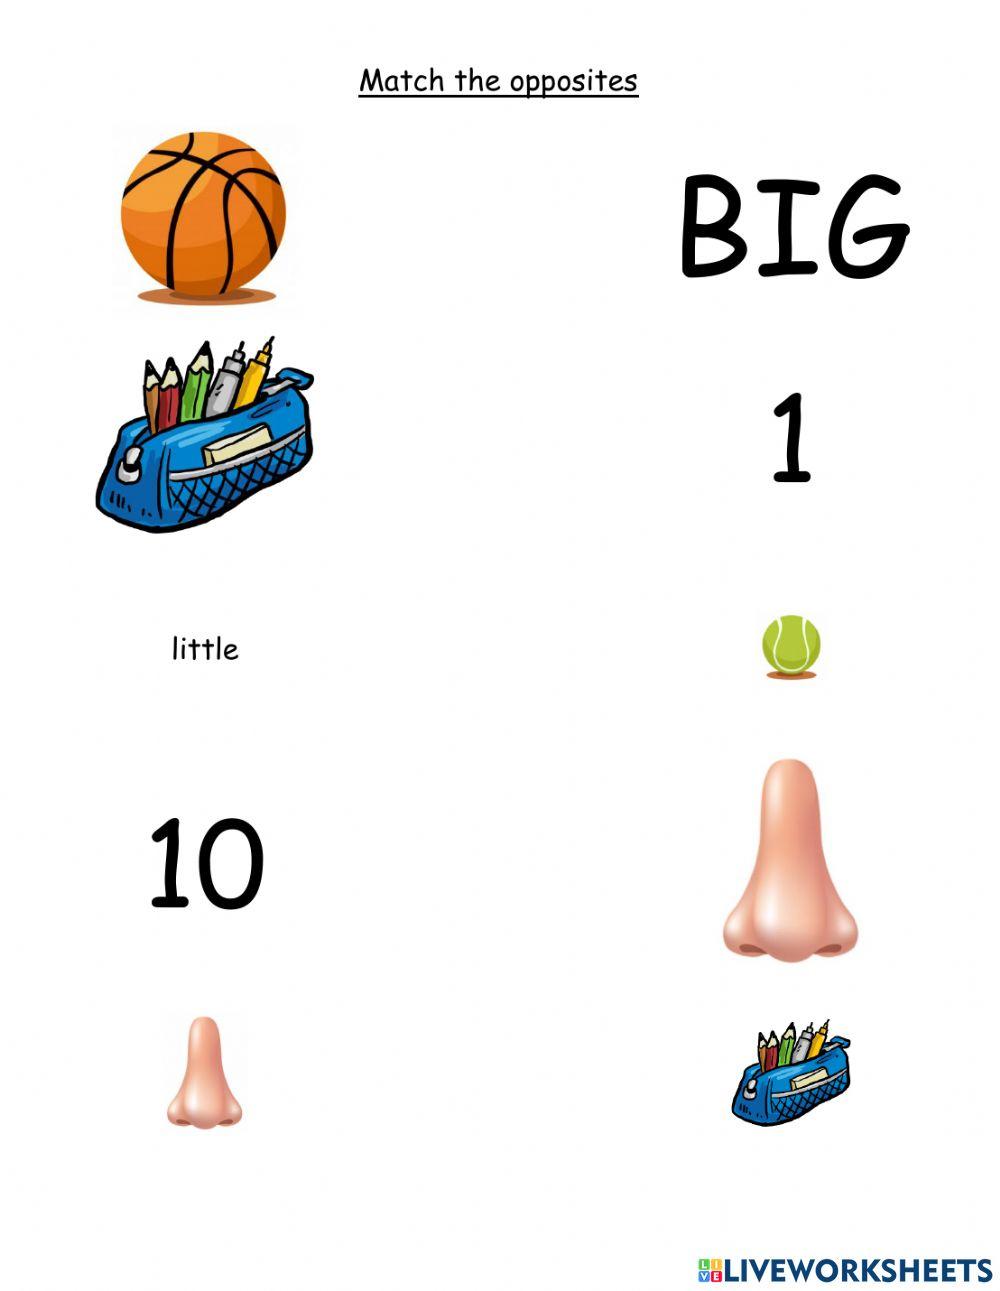 BIG or little